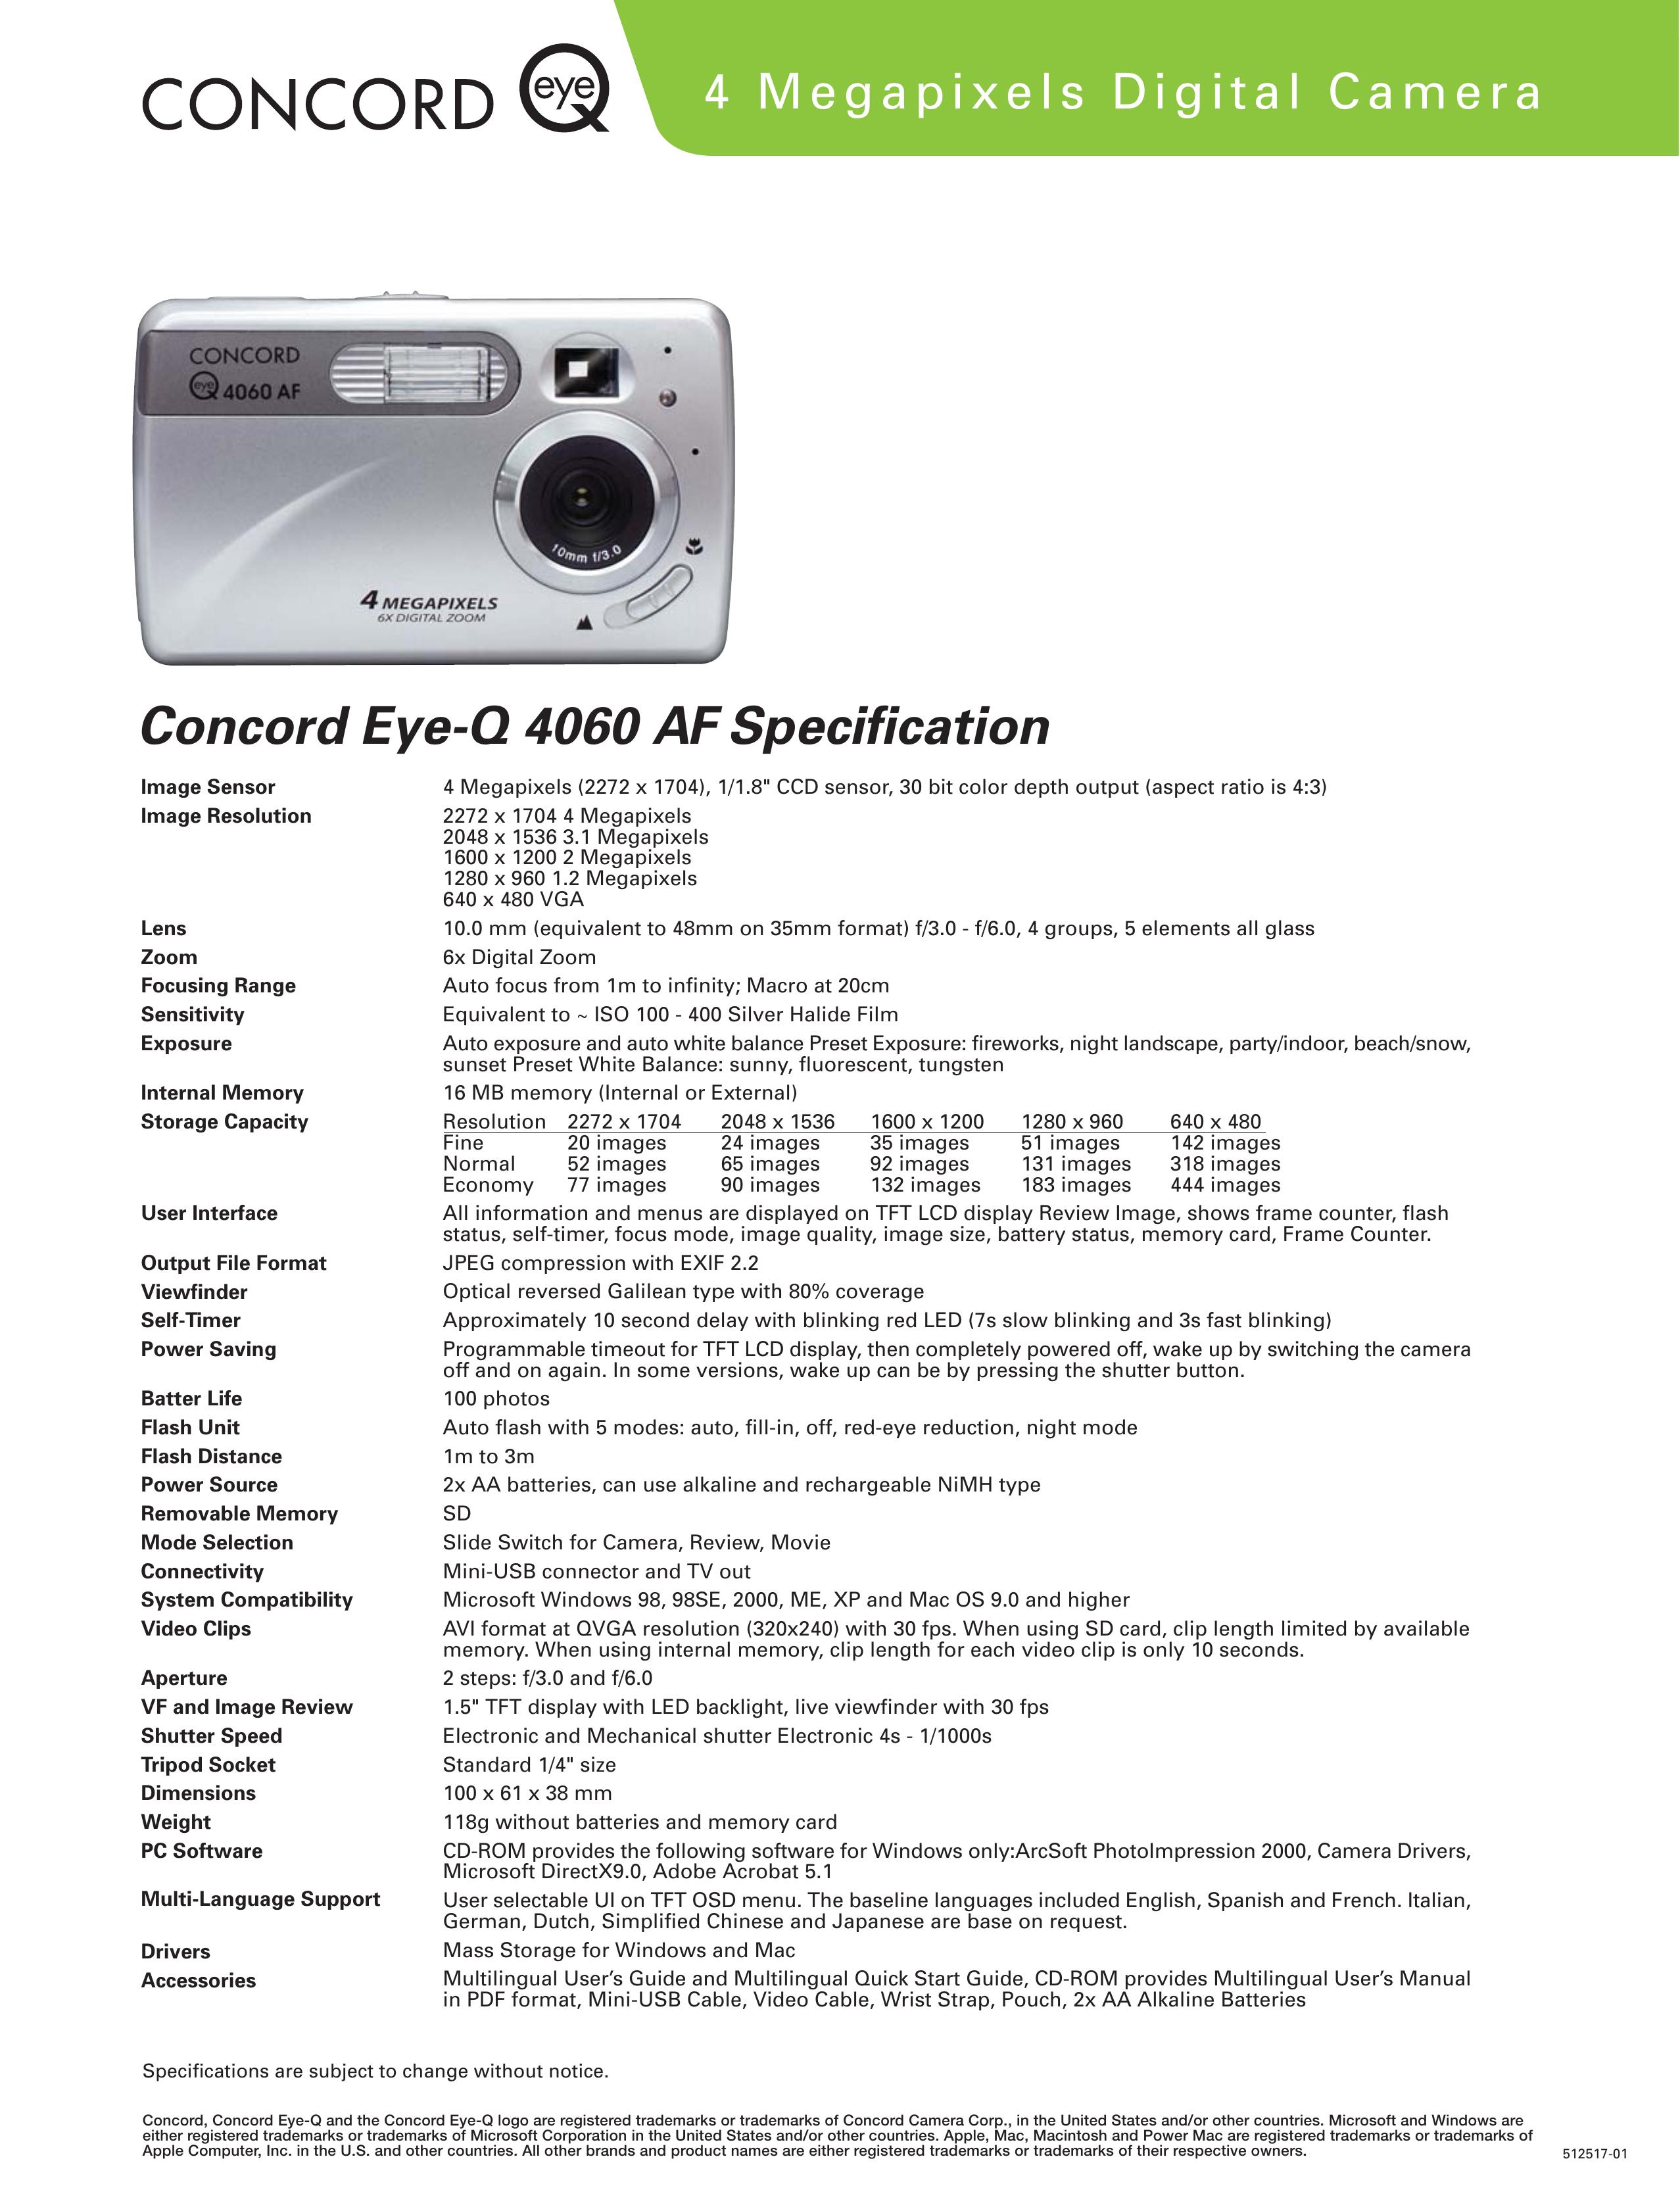 Concord Camera Eye-Q 4060 Digital Camera User Manual